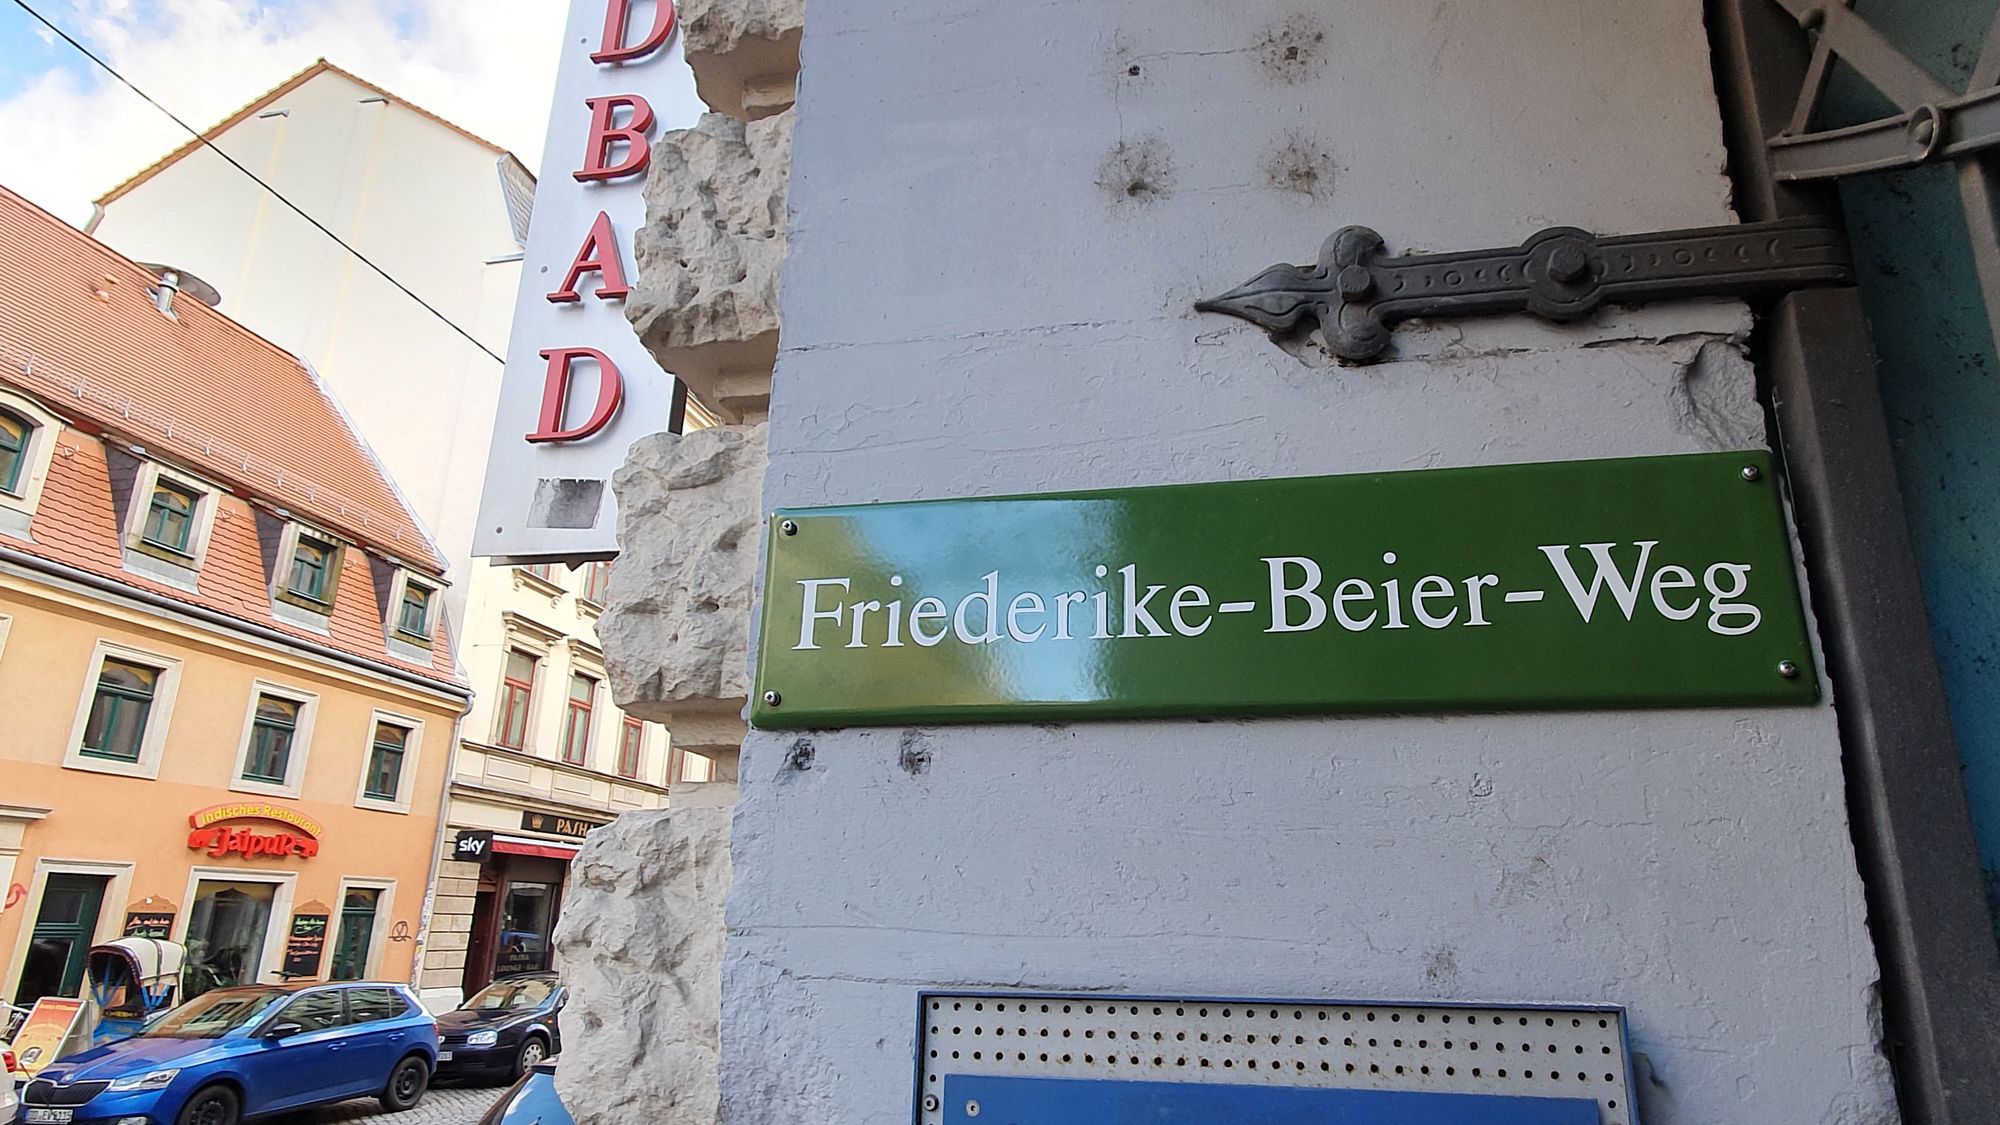 Friederike-Beier-Weg